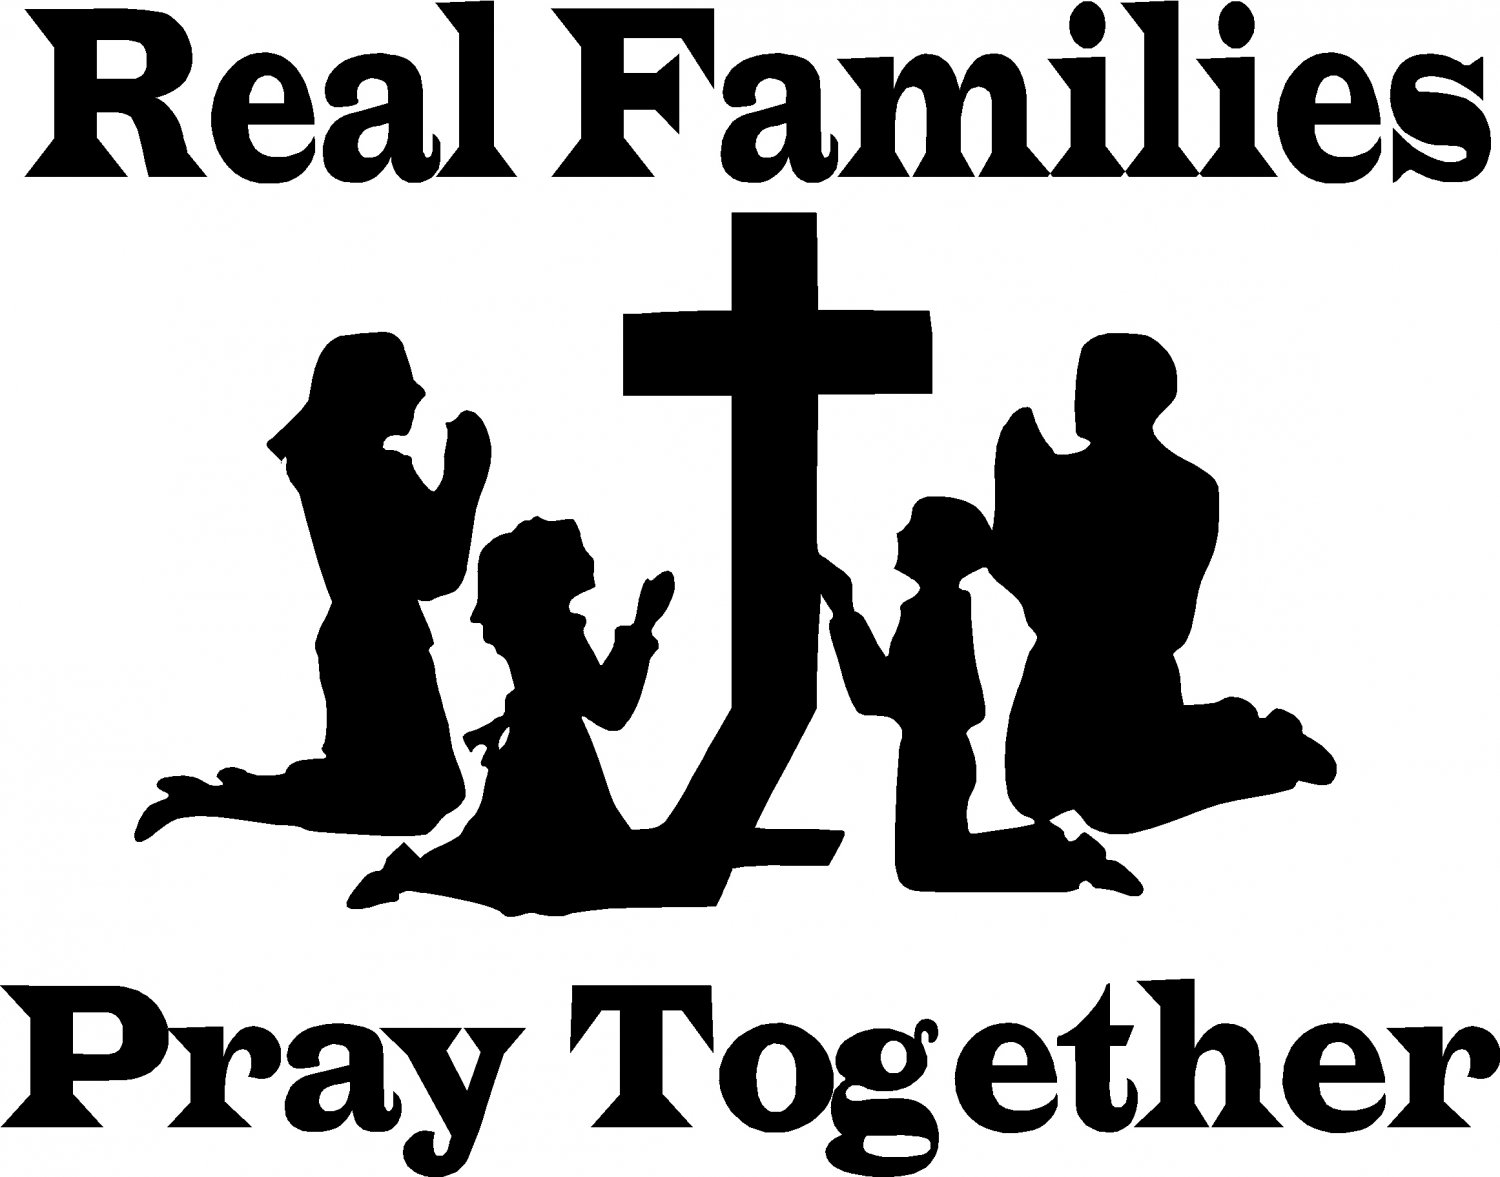 family praying clipart